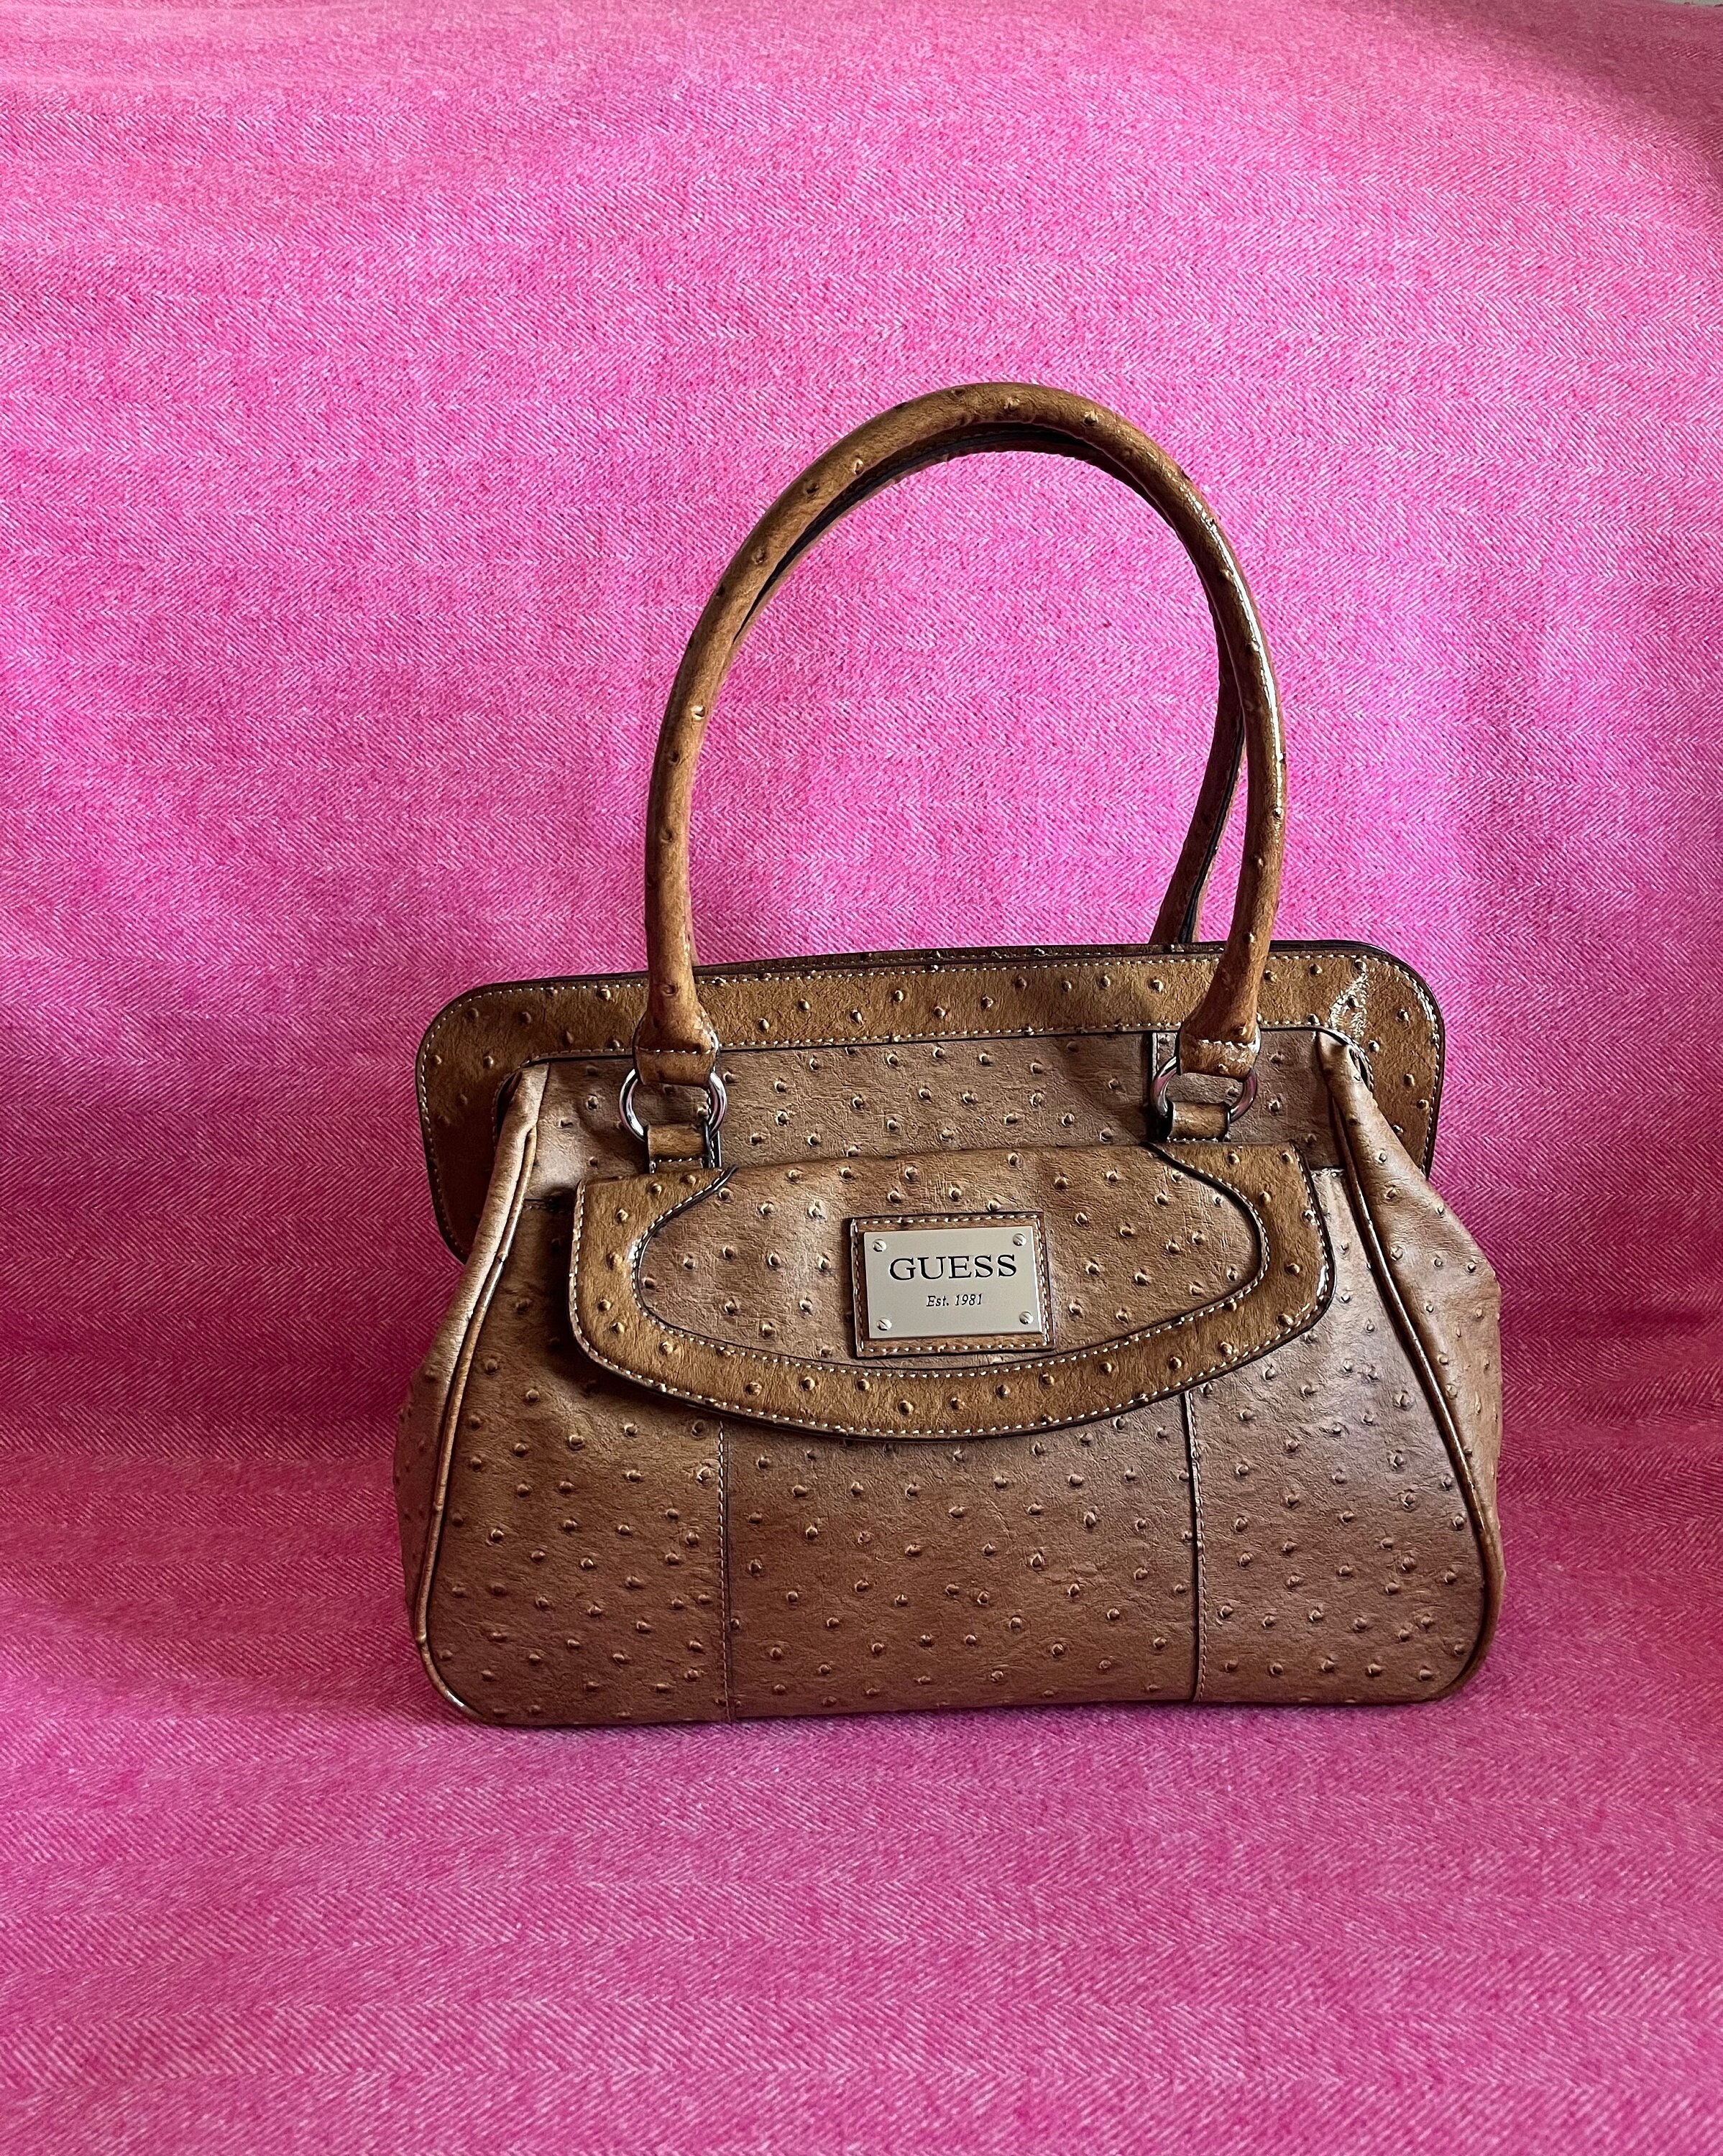 GUESS Hand Bag Purse Satchel Brown Oak Park | eBay